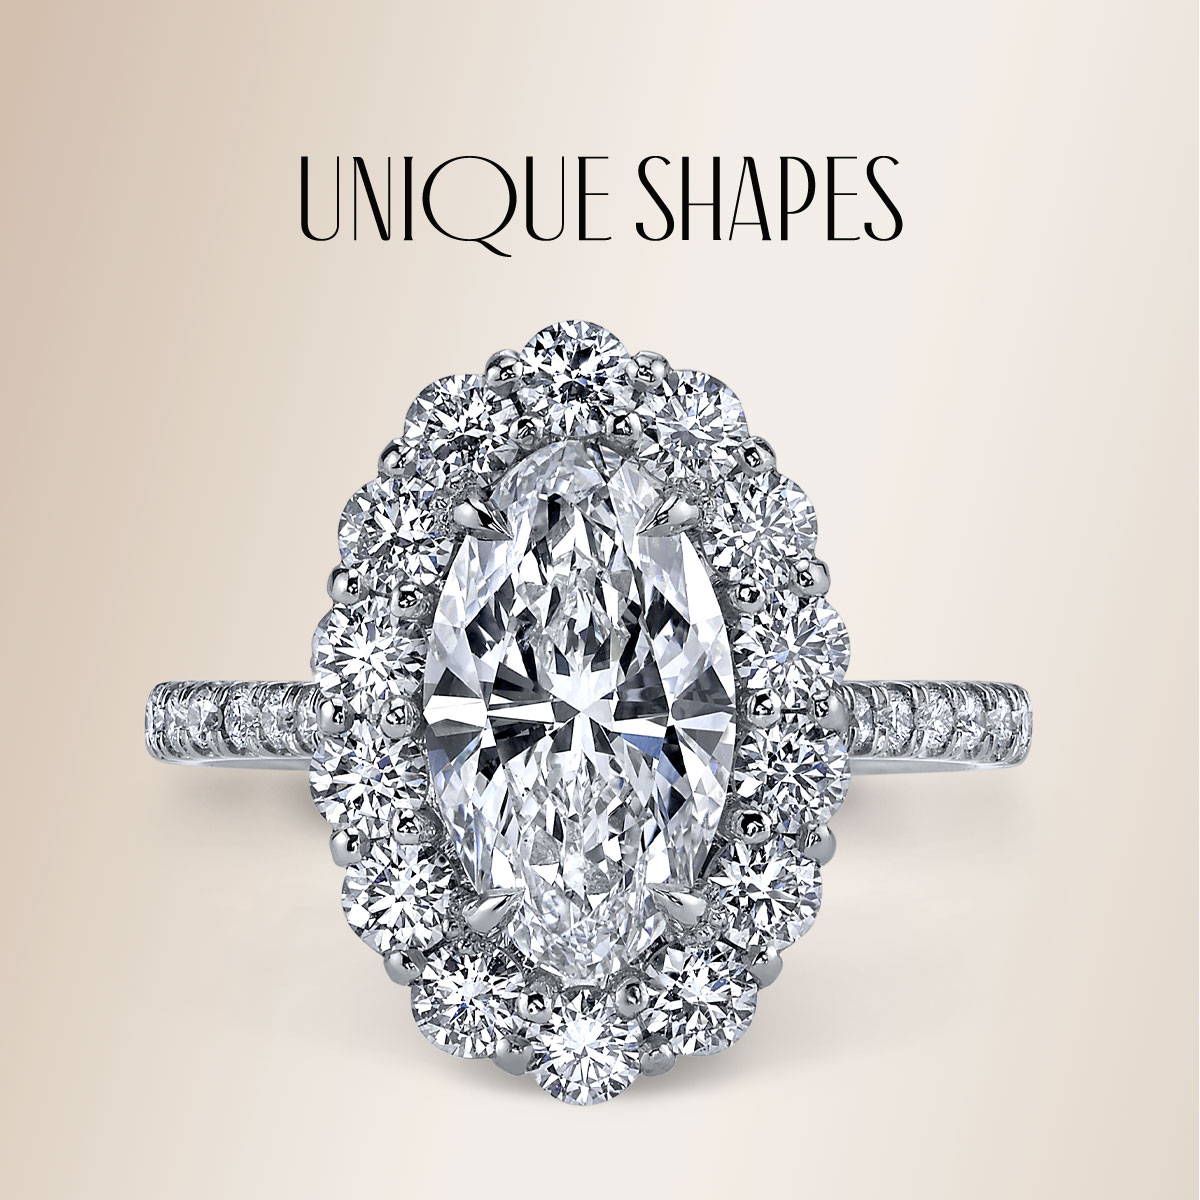 uniquely shaped diamond rings